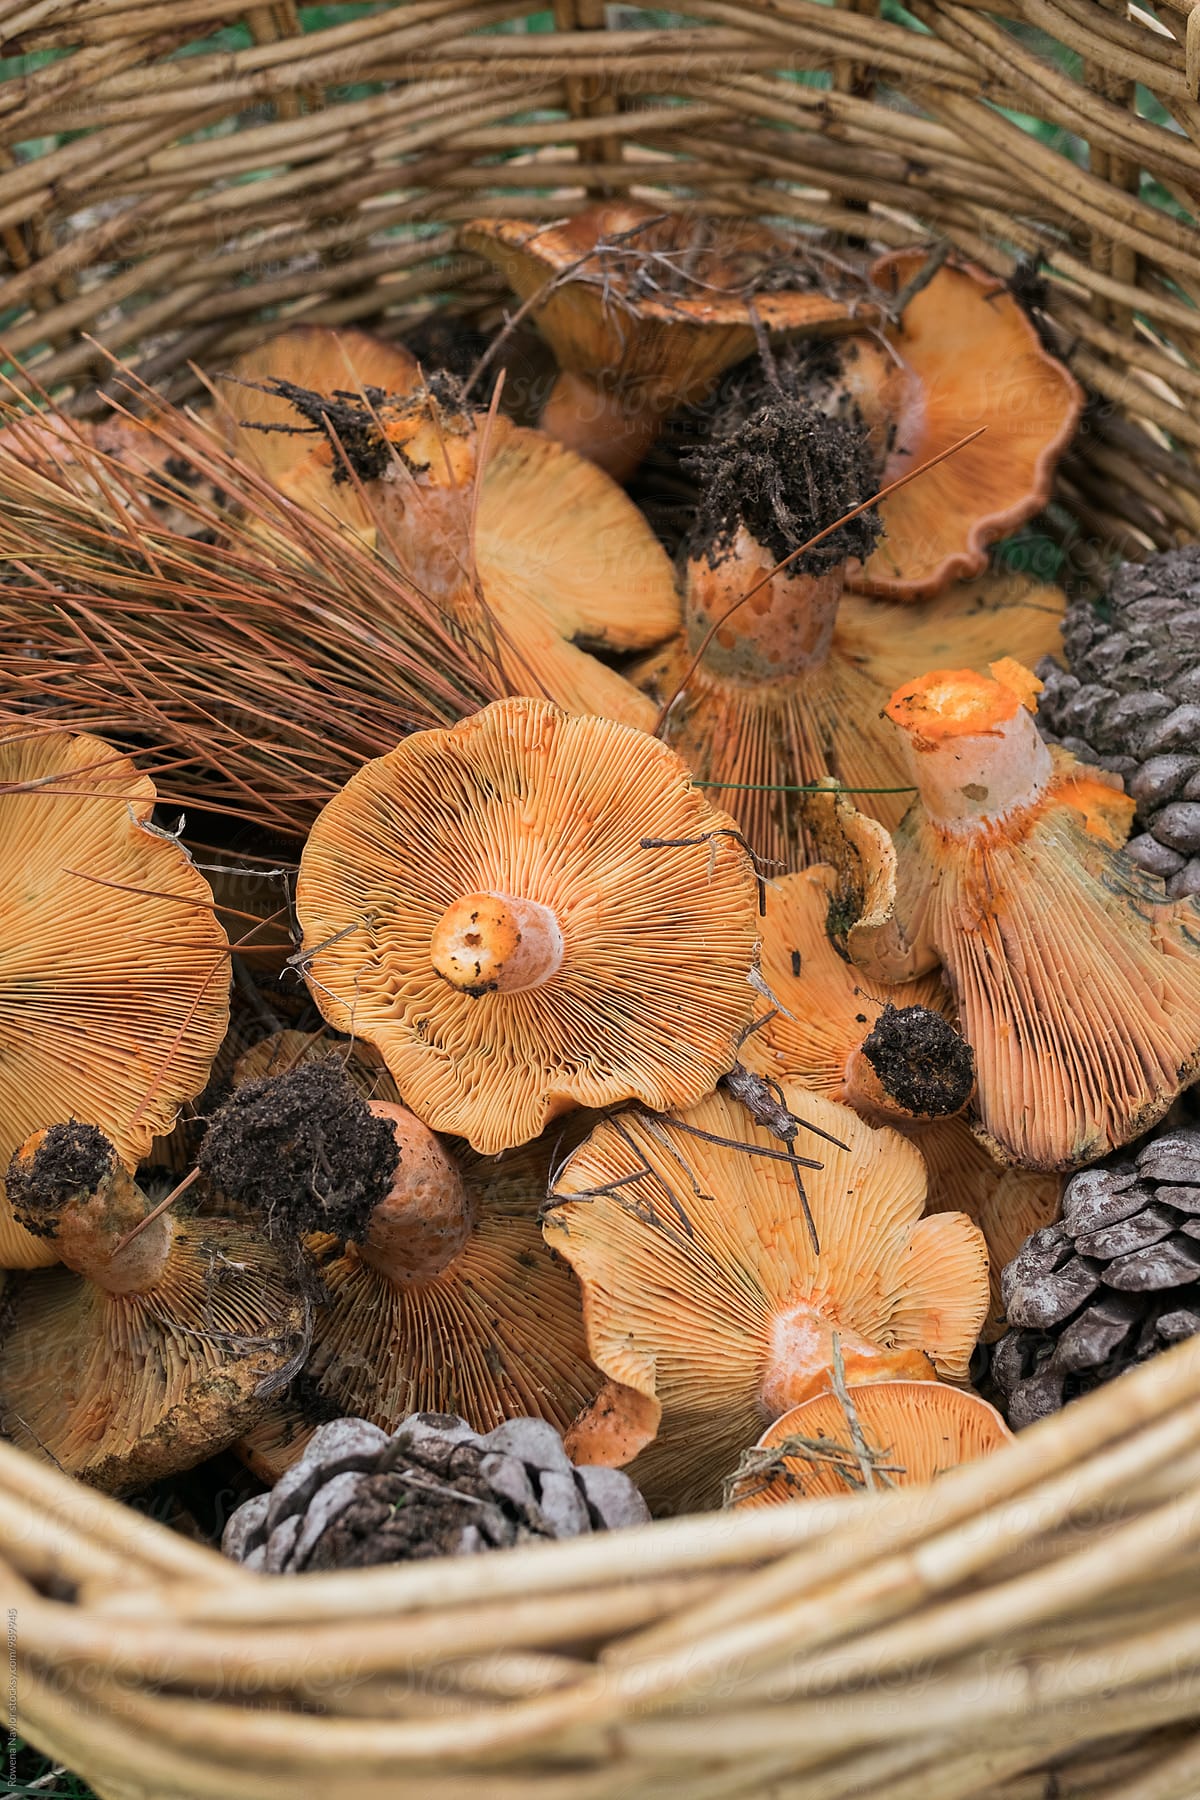 Foraged Pine Mushrooms